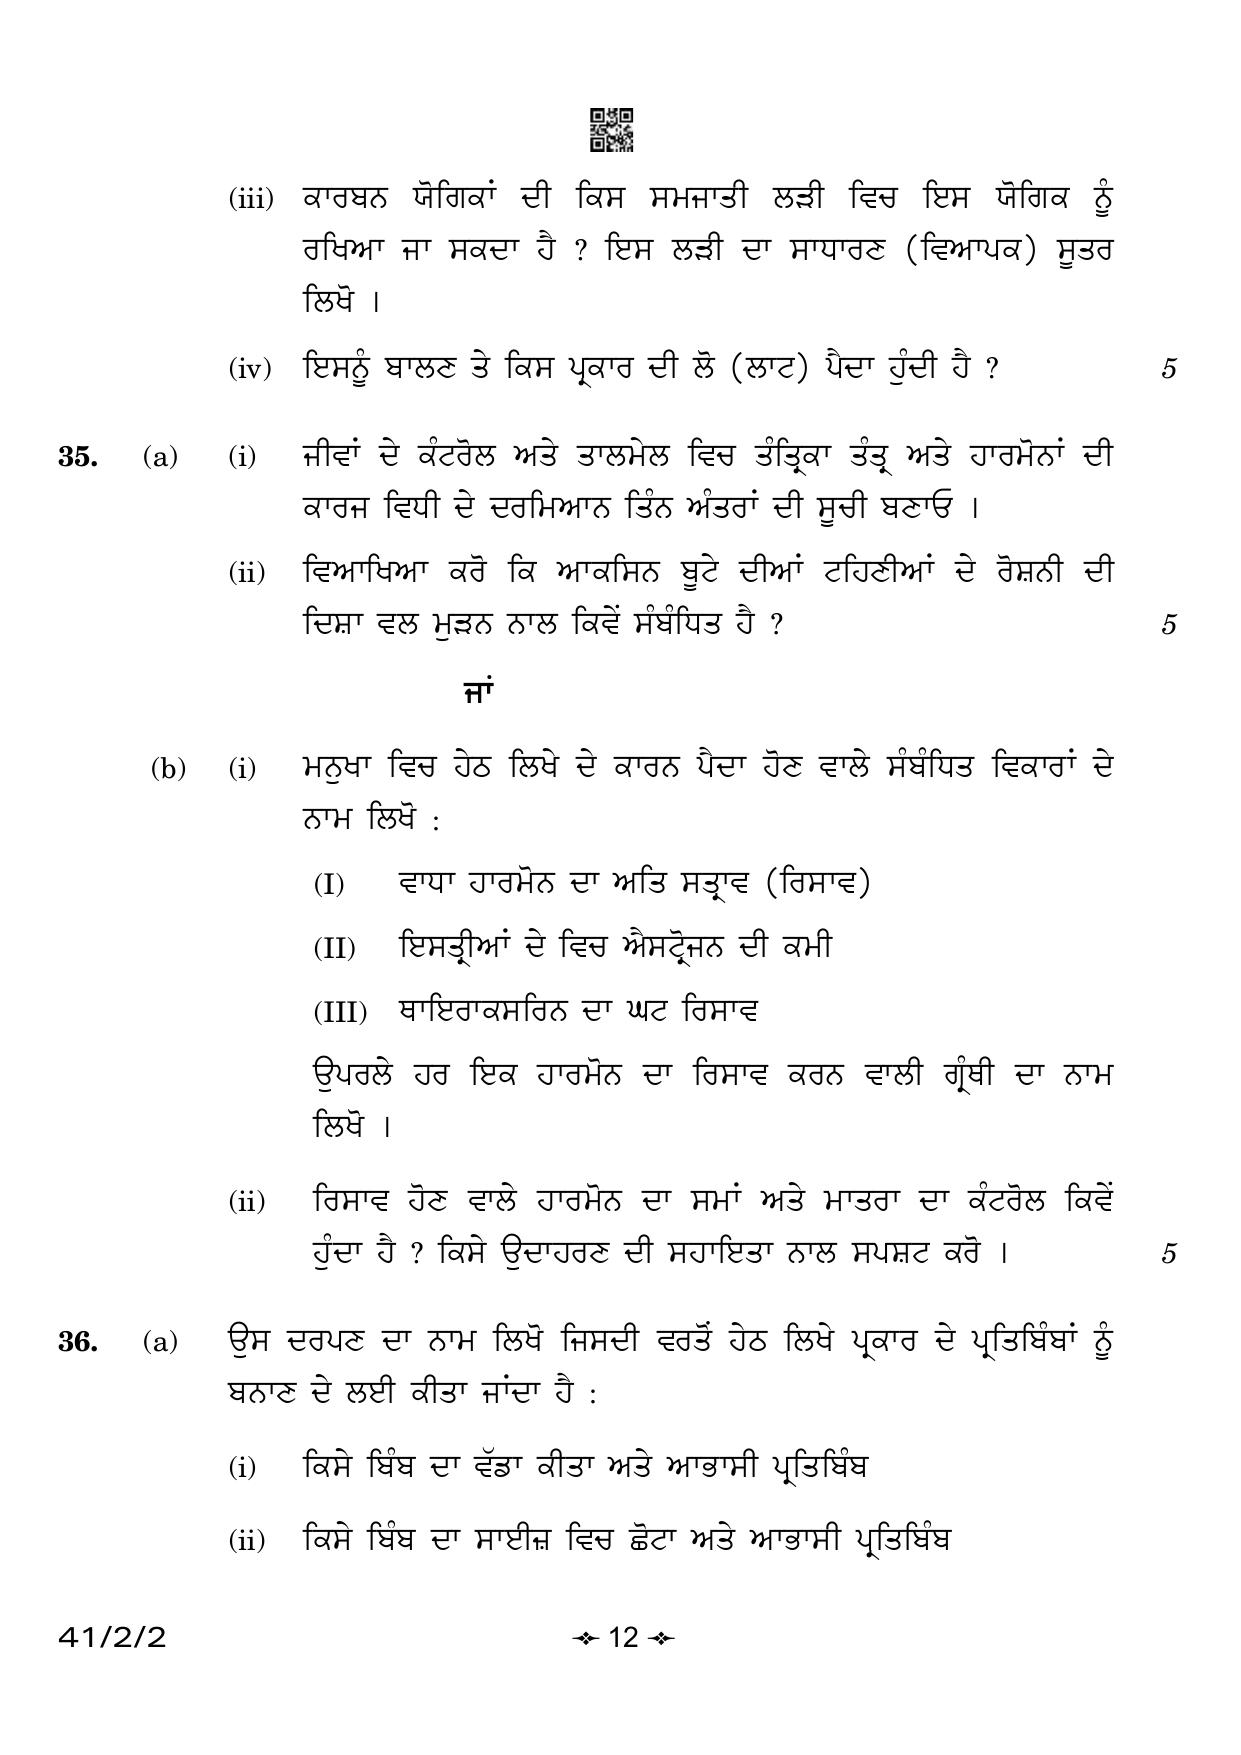 CBSE Class 10 41-2-2 Science Punjabi Version 2023 Question Paper - Page 12